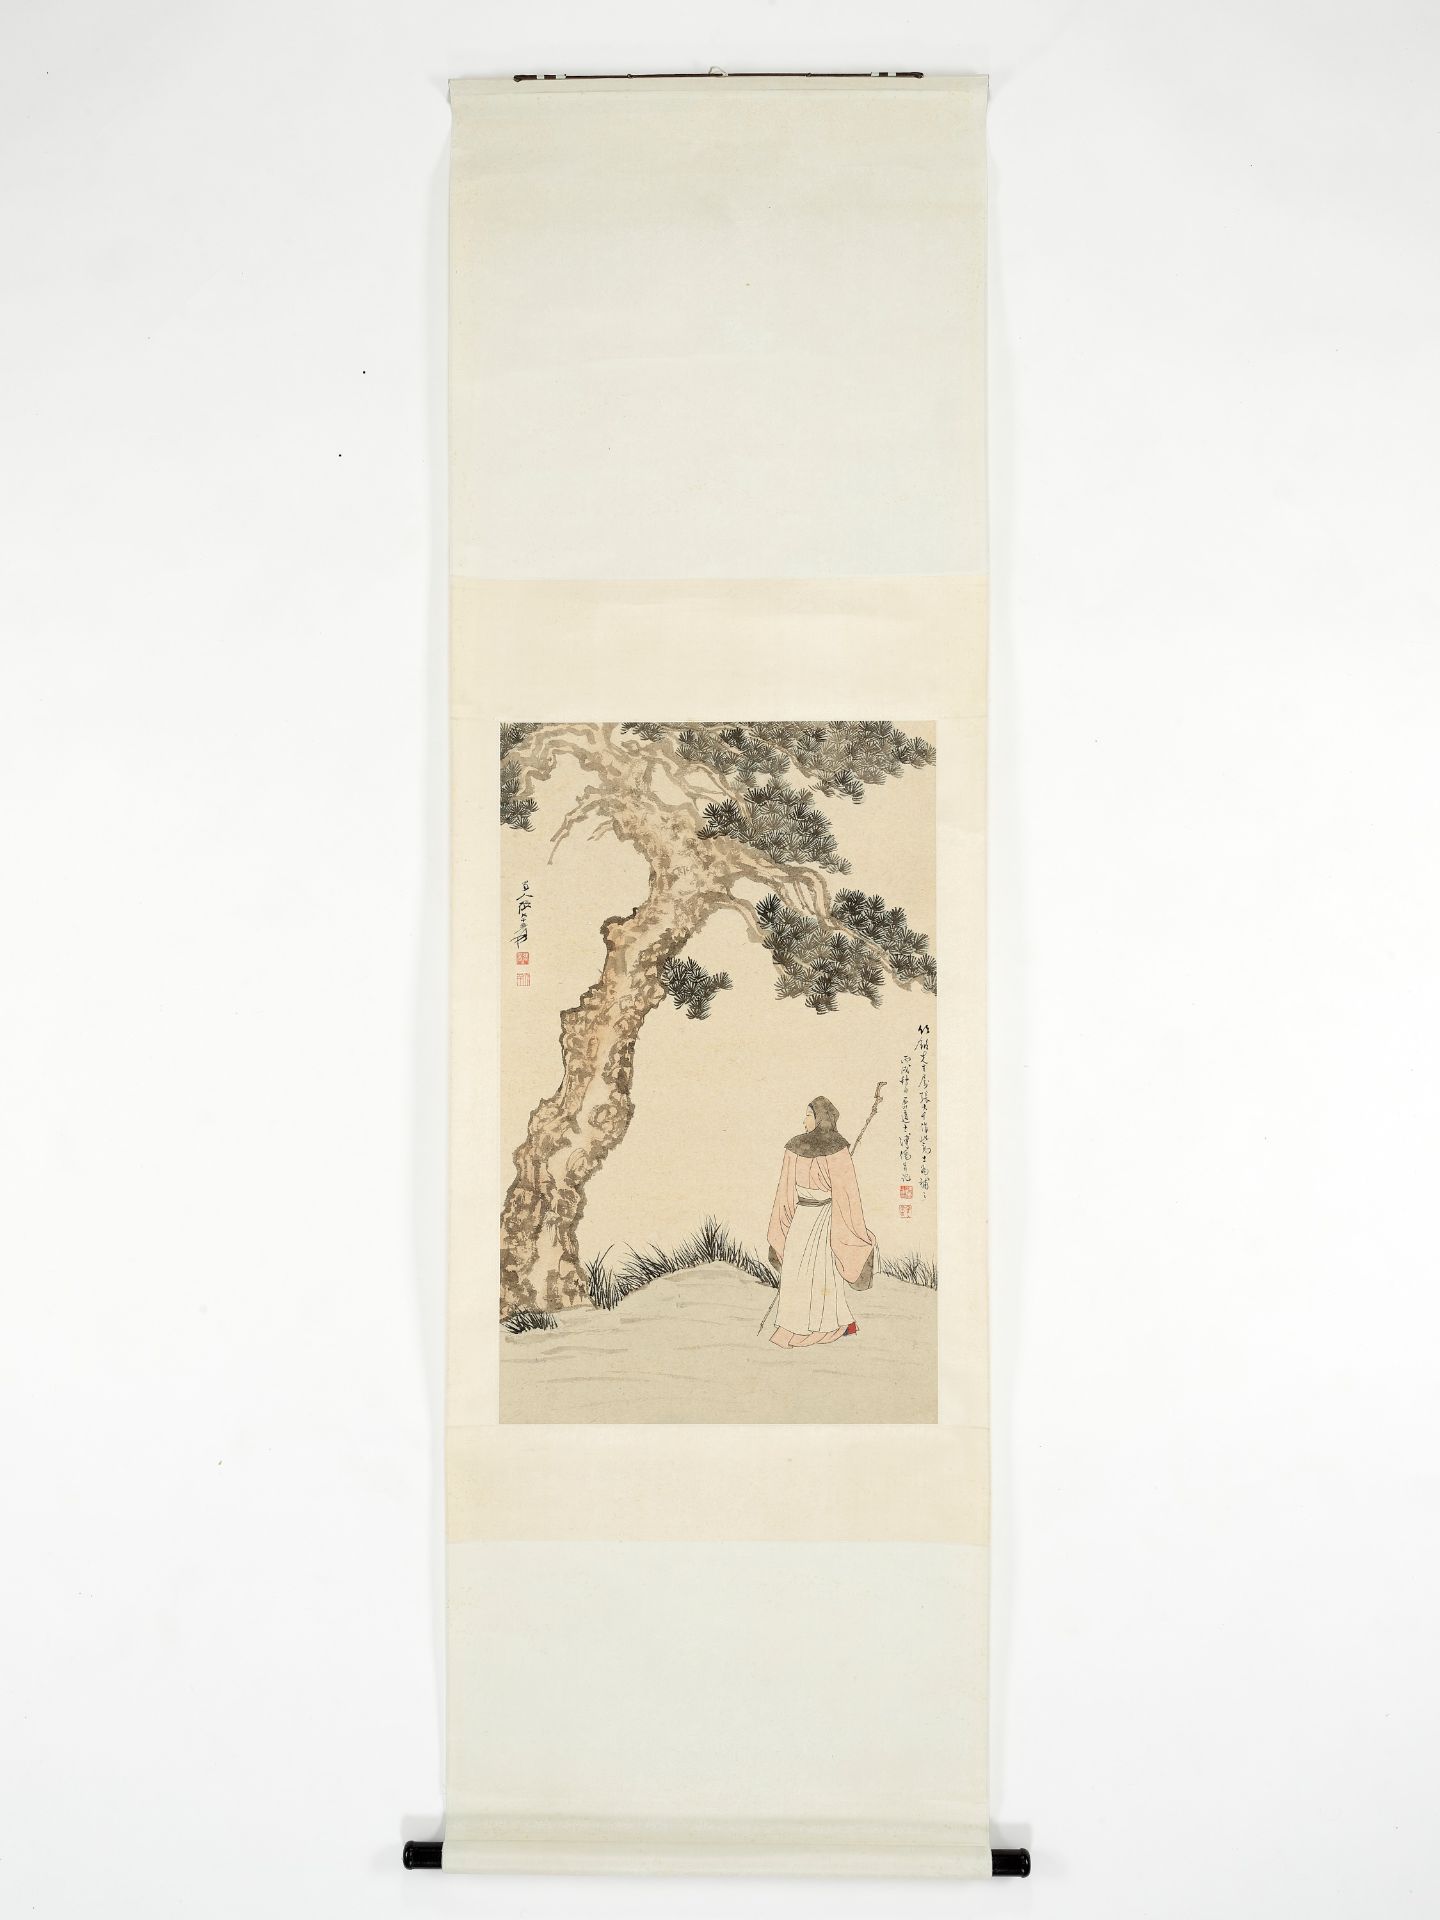 SCHOLAR UNDER PINE TREE', BY ZHANG DAQIAN (1899-1983) AND PU RU (1896-1963), DATED 1946 - Image 9 of 10